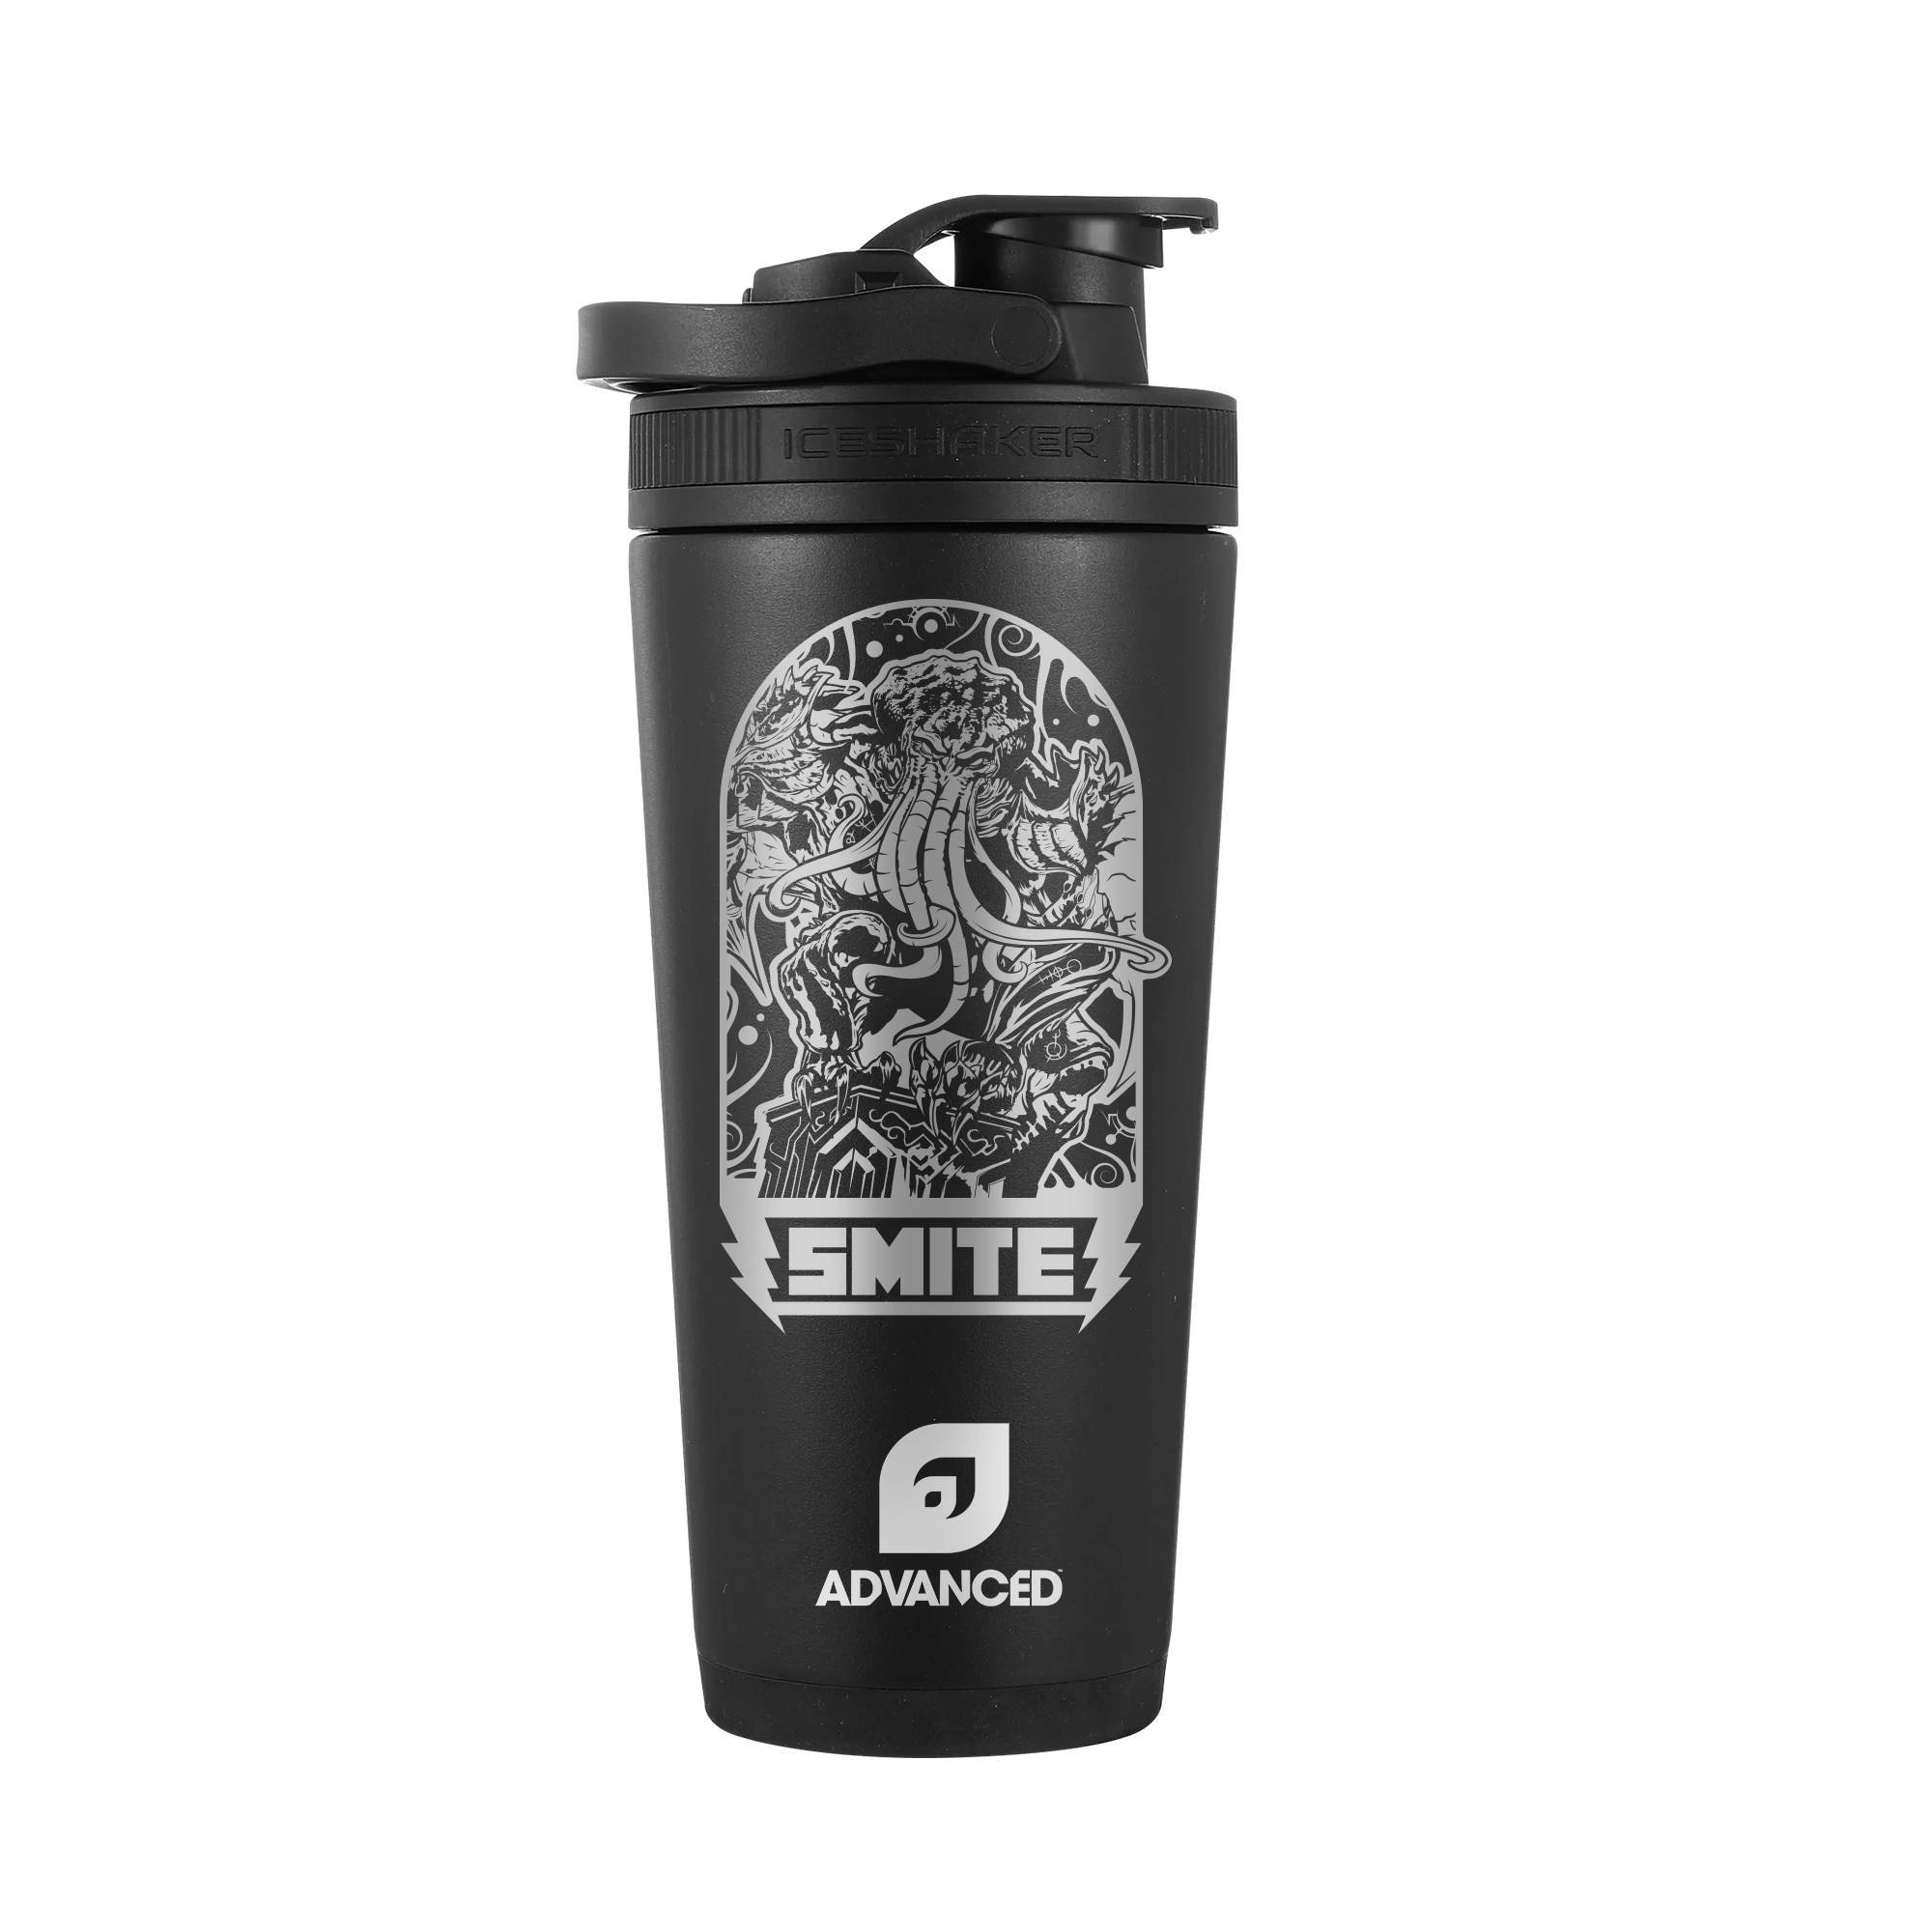 ADV x Smite - Cthulhu Premium 26oz Ice Shaker